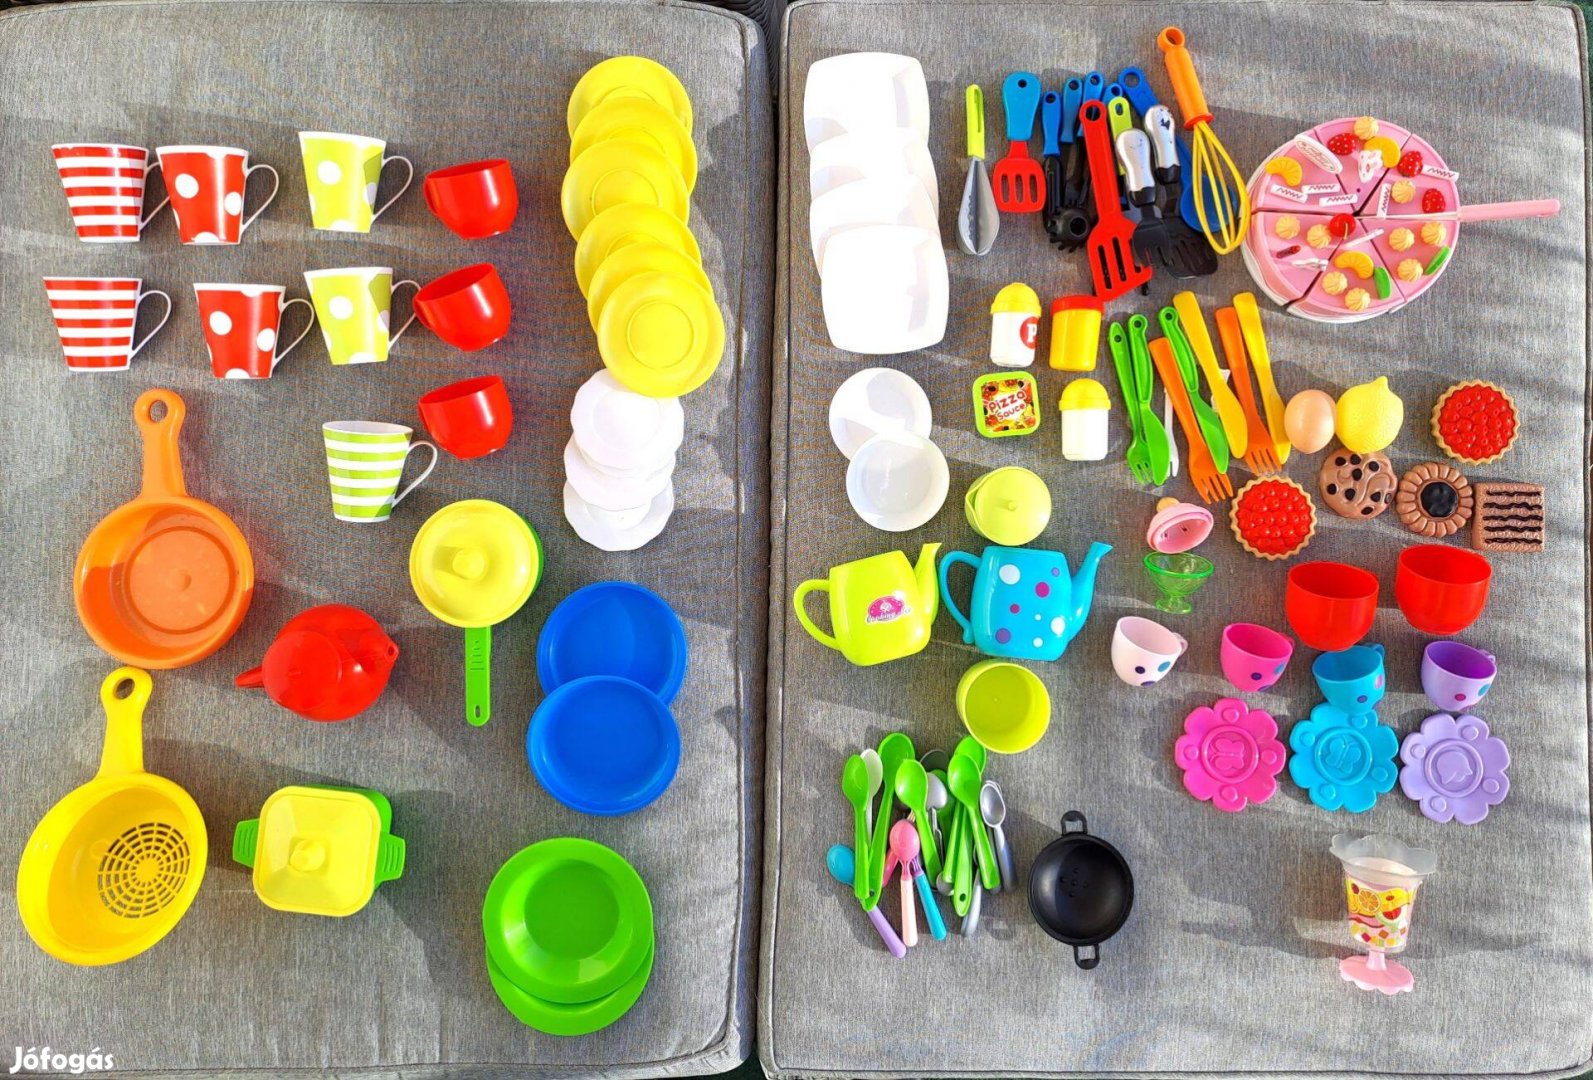 Süti konyha, sok darabos, gyerekjáték, műanyag [1017]